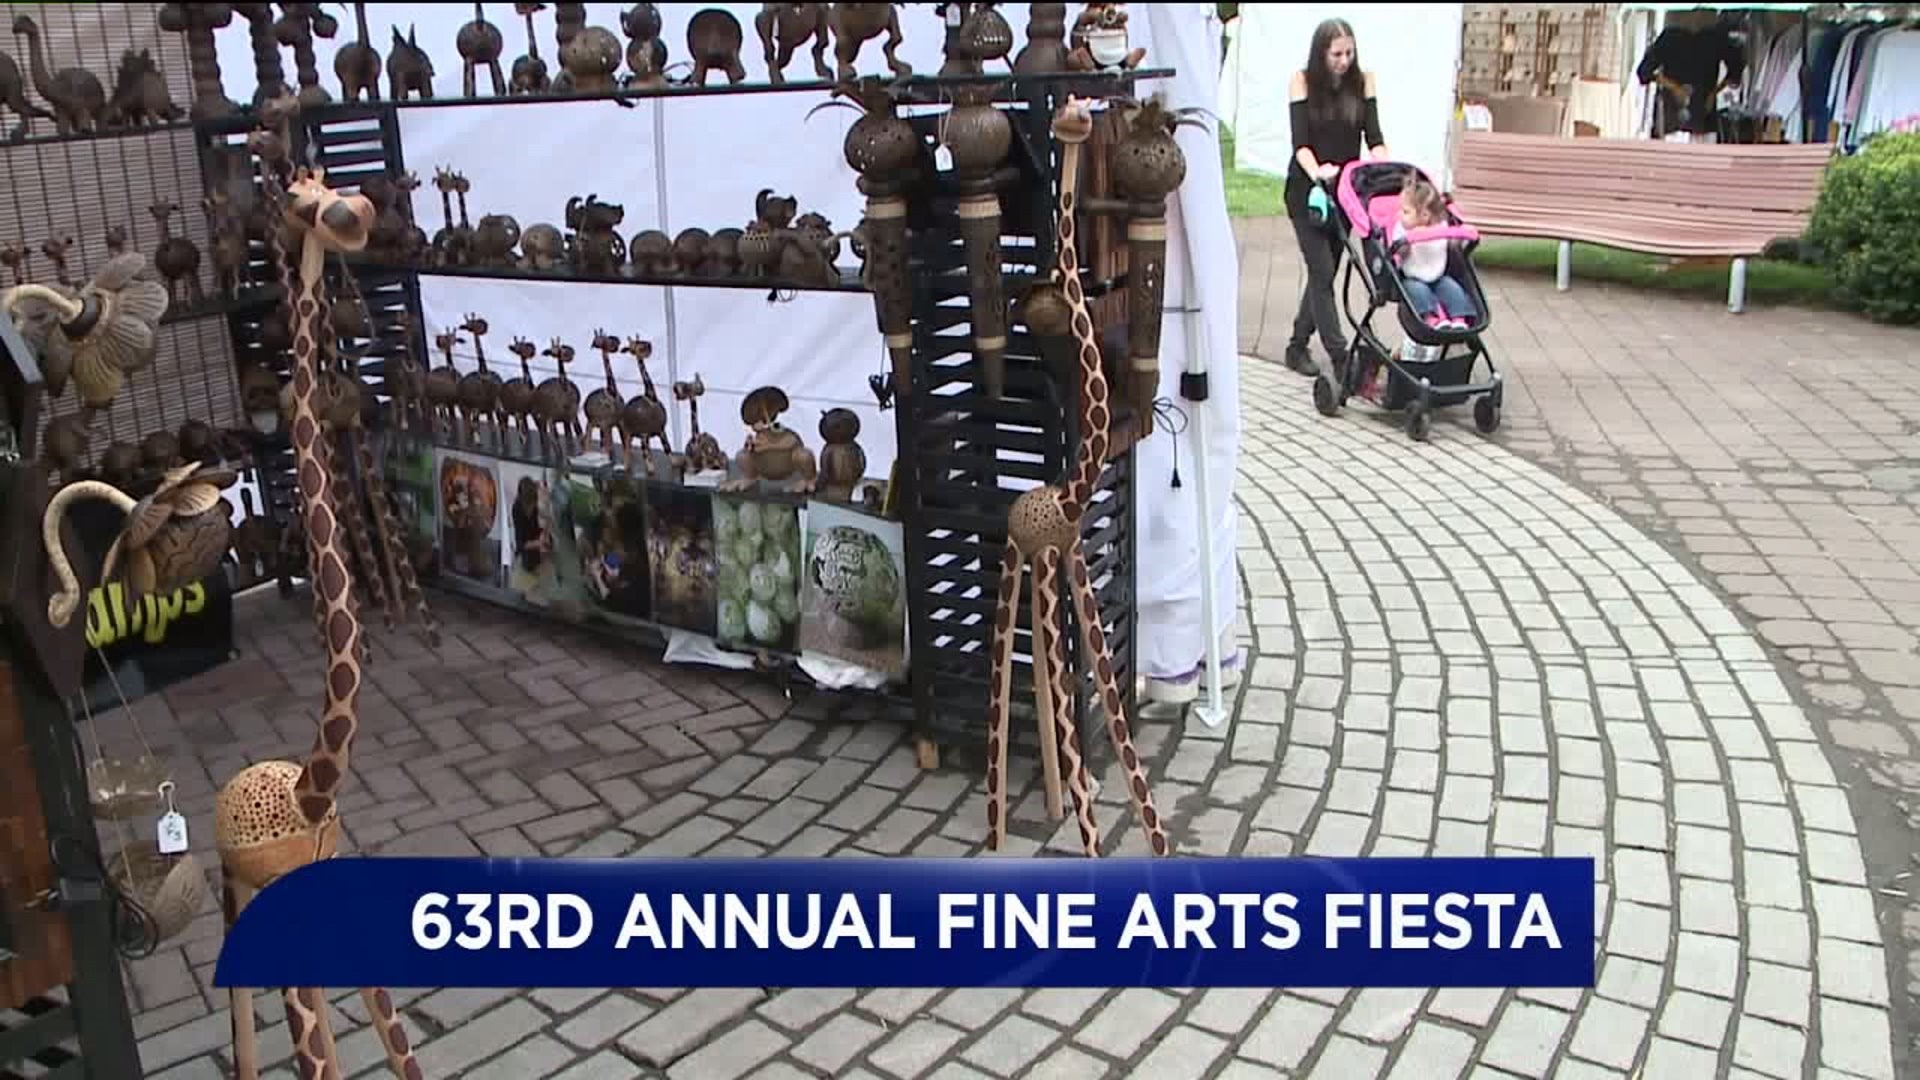 63rd Annual Fine Arts Fiesta